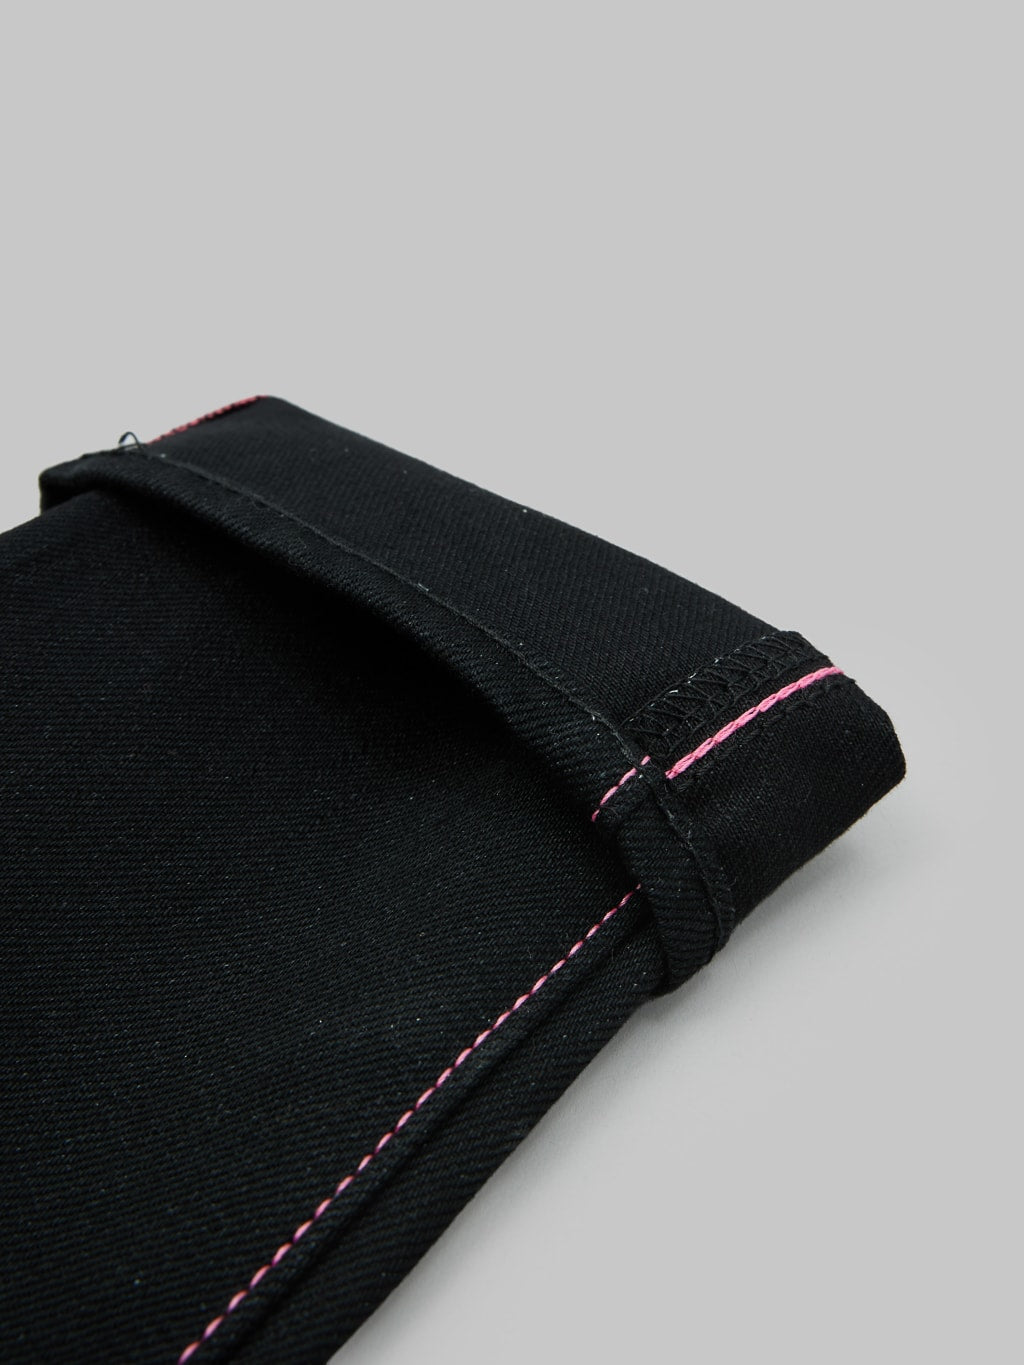 momotaro 0405b selvedge black denim high tapered jeans black weft